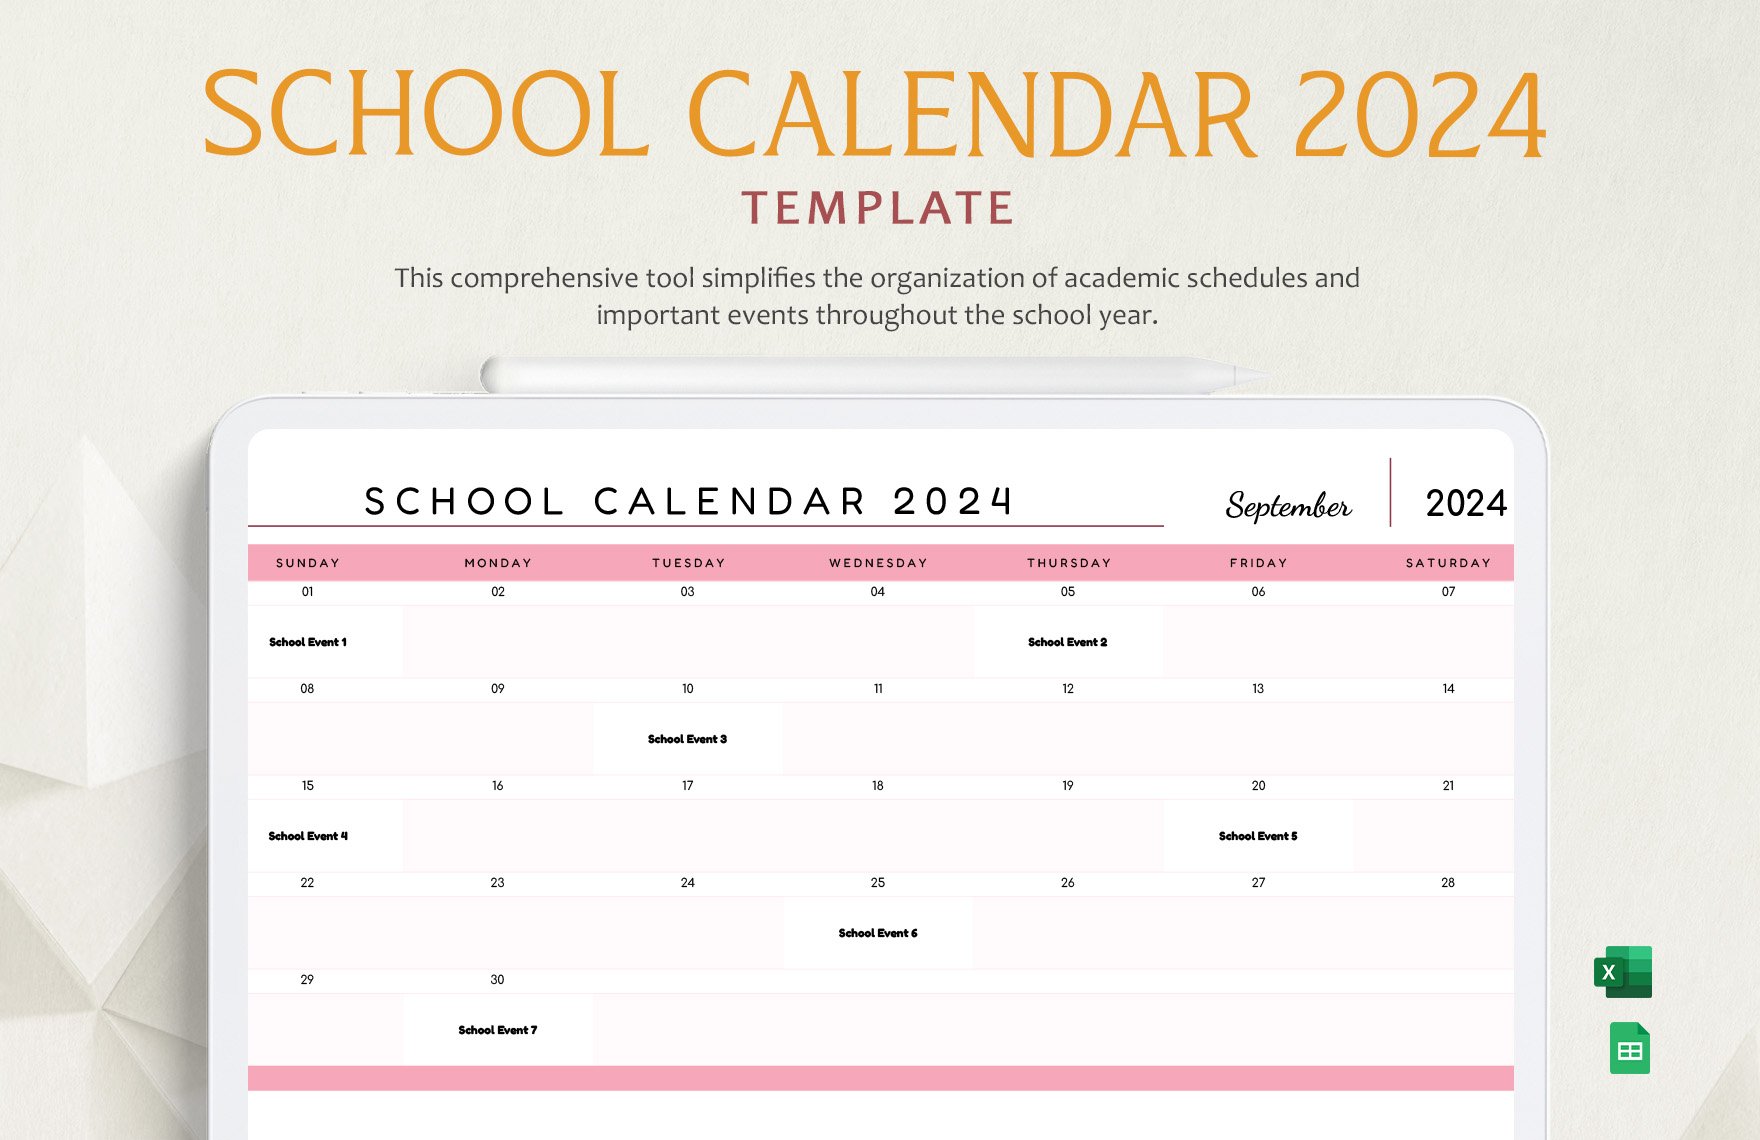 Free School Calendar 2024 Template in Excel, Google Sheets